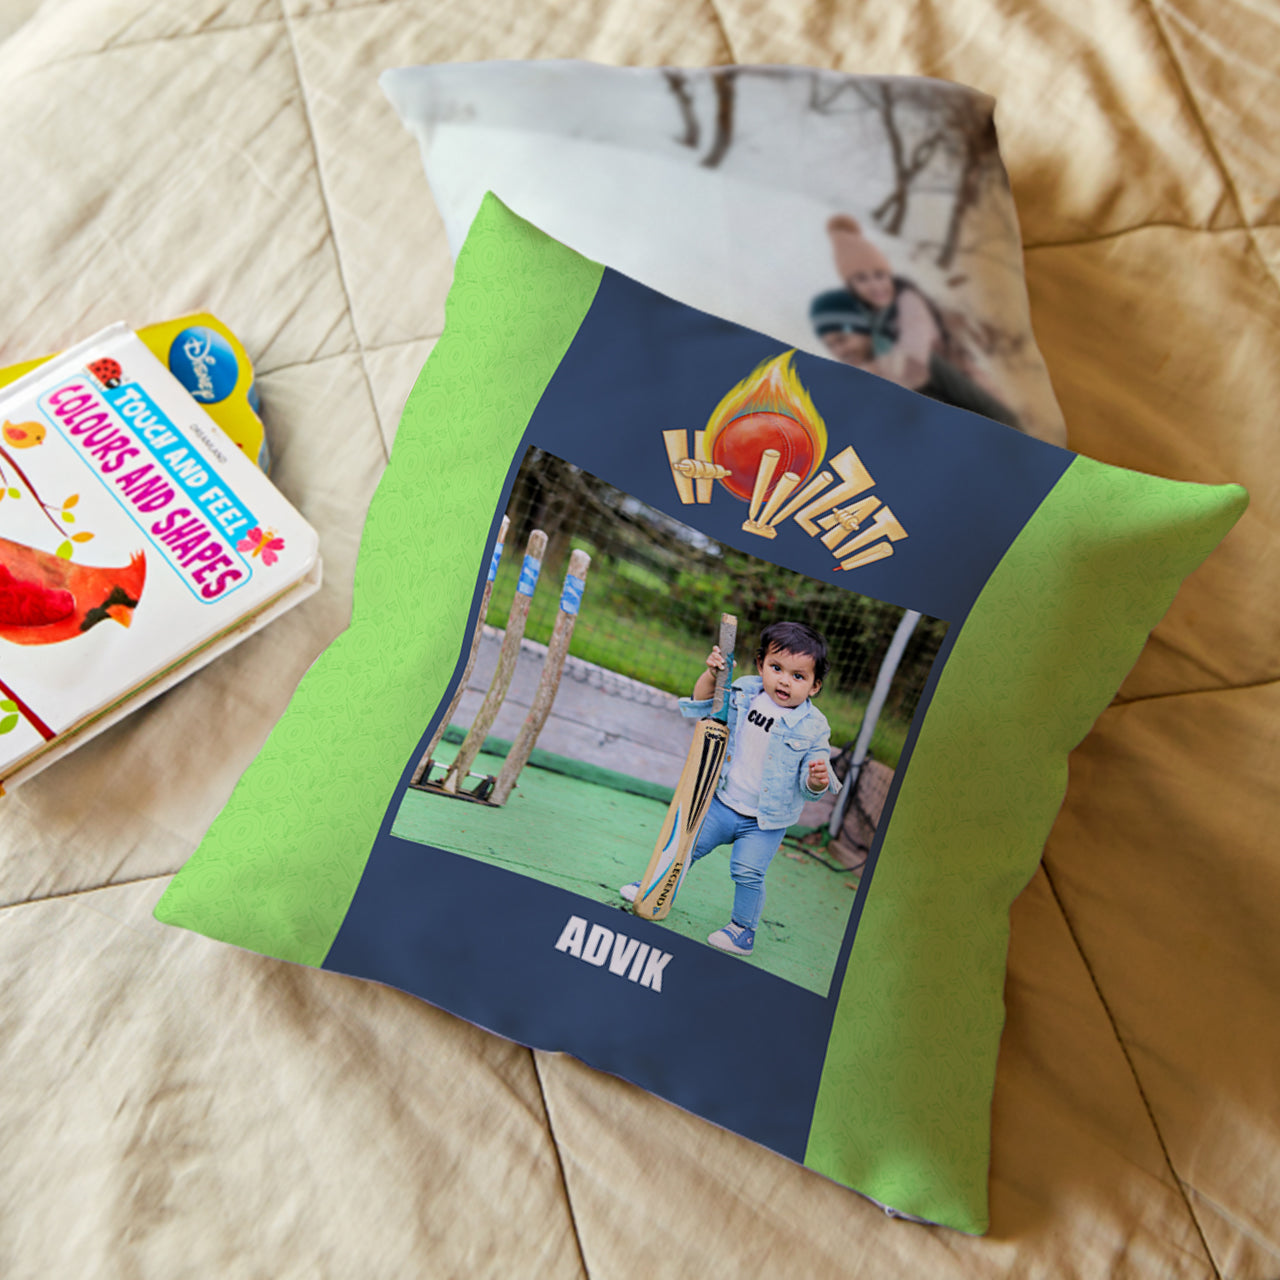 Personalised Photo Cushions - Cricket Buzz